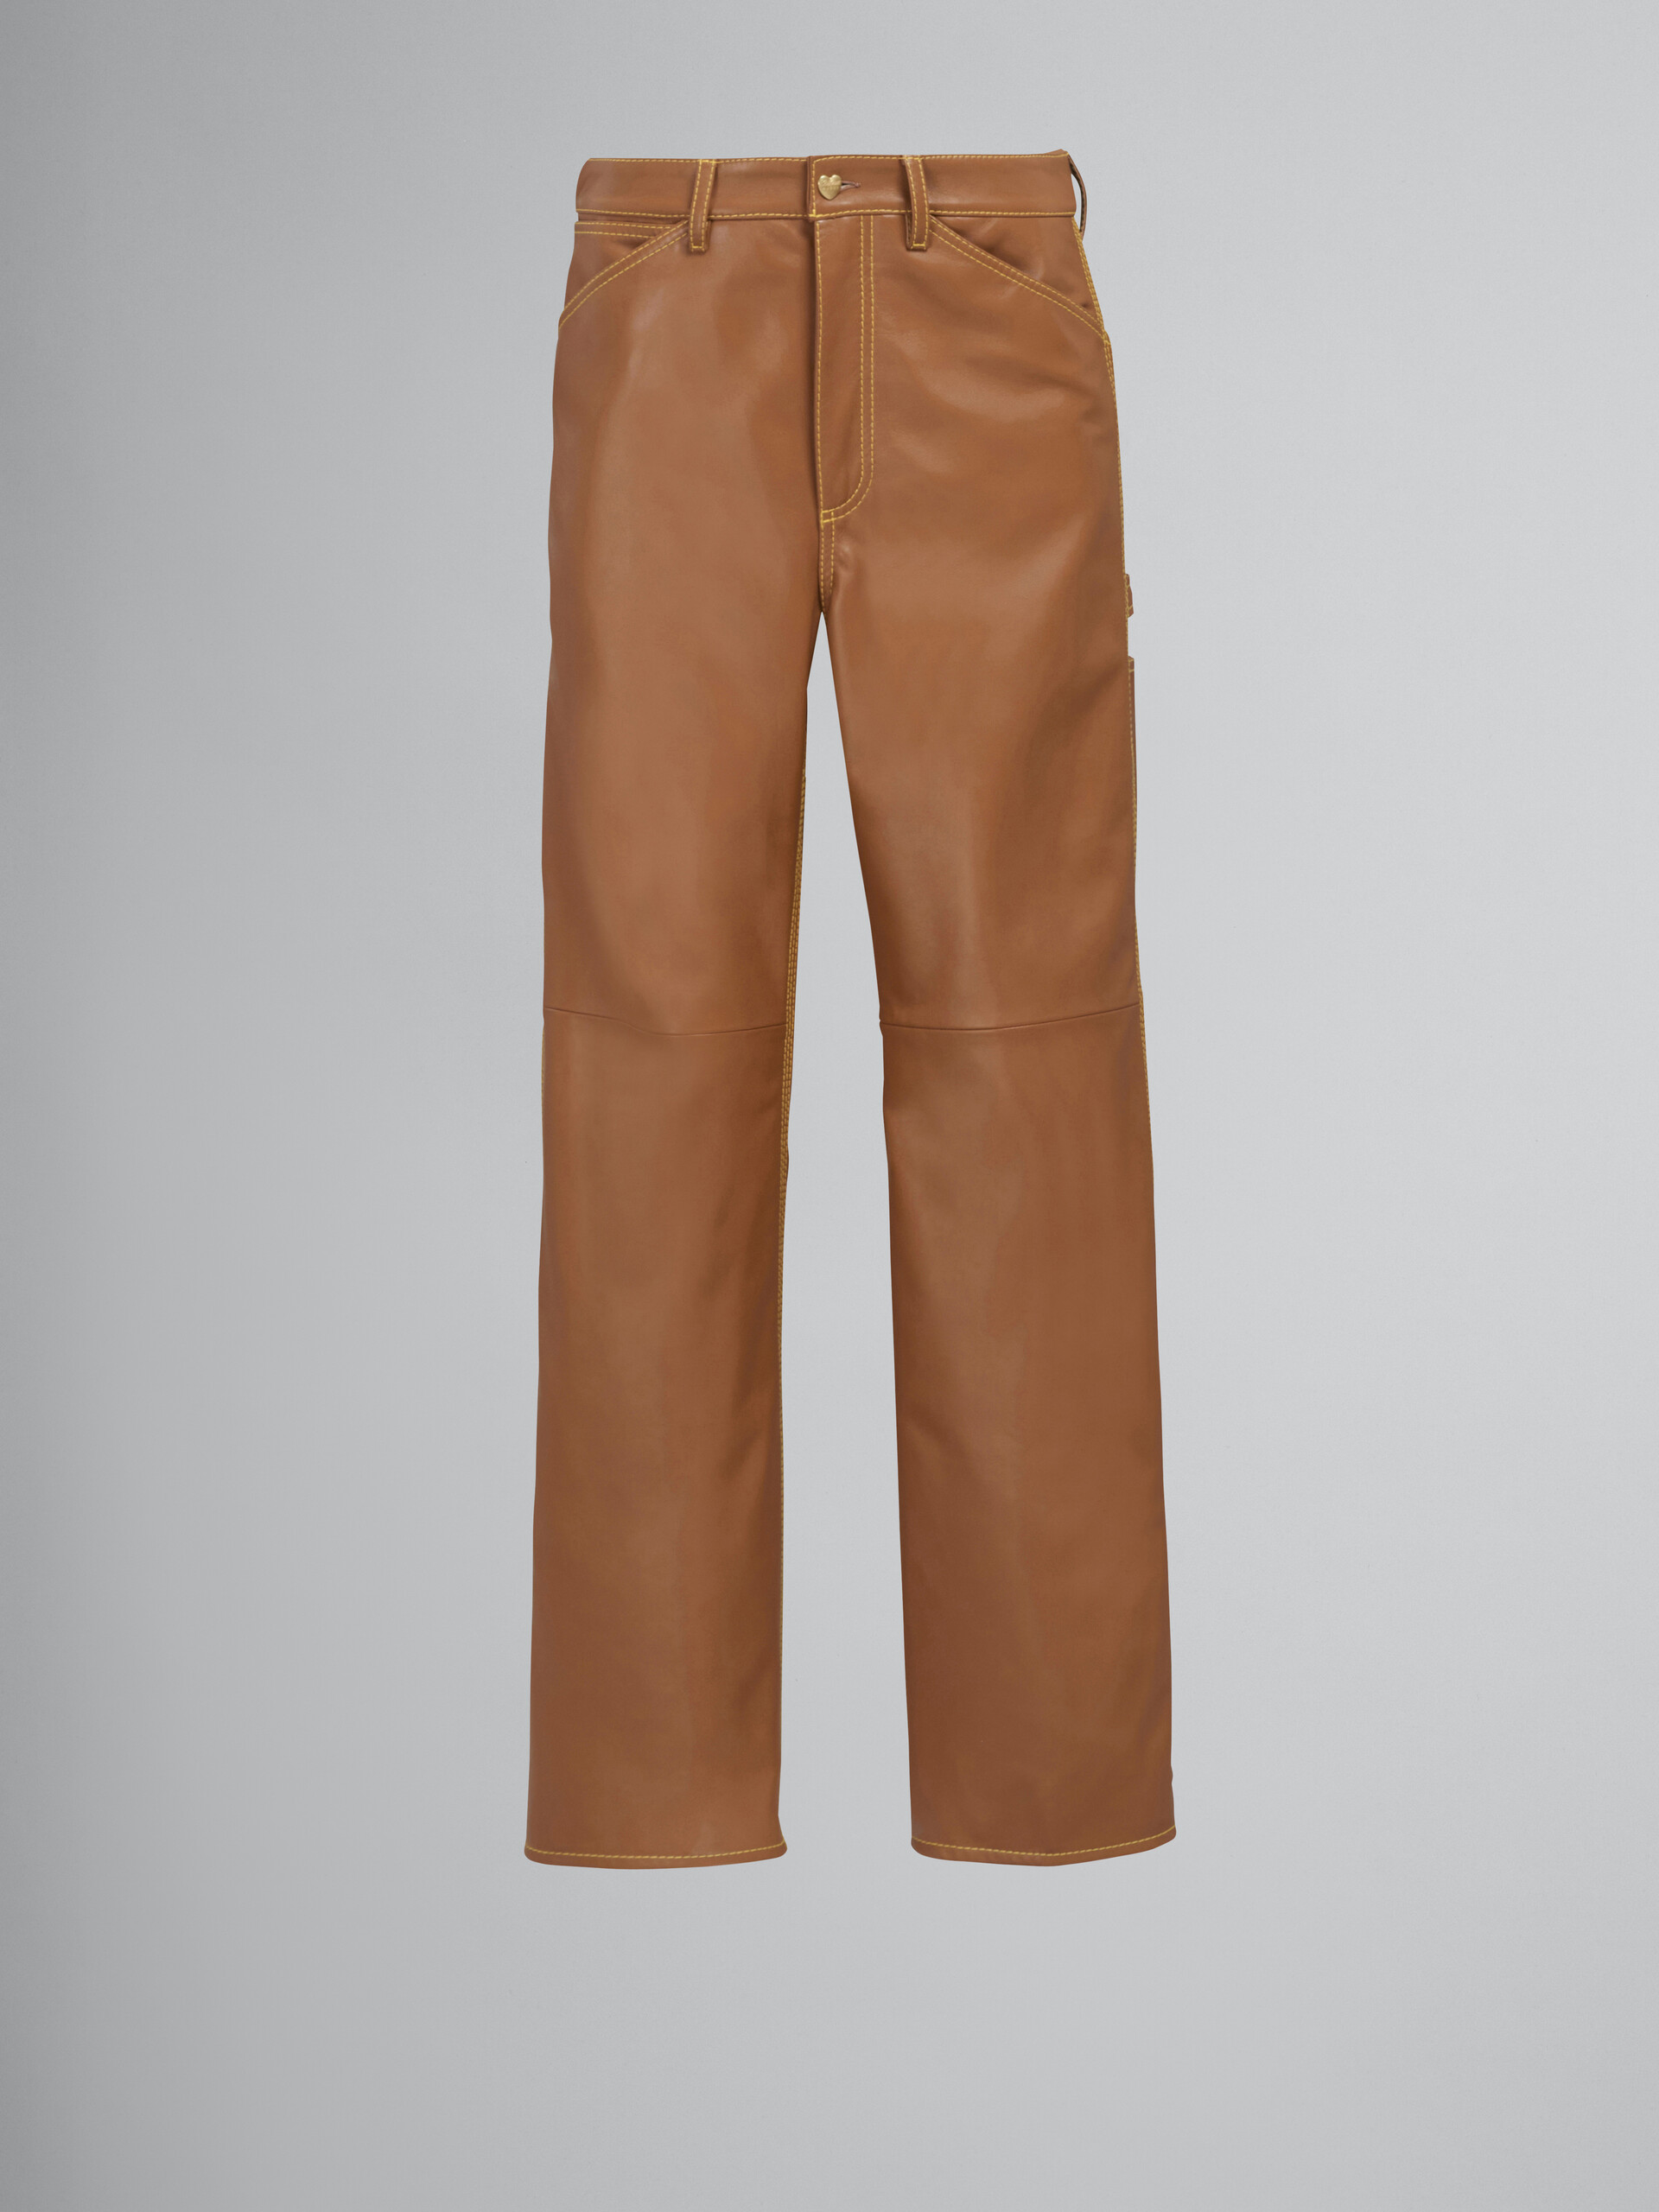 MARNI x CARHARTT WIP - brown leather trousers